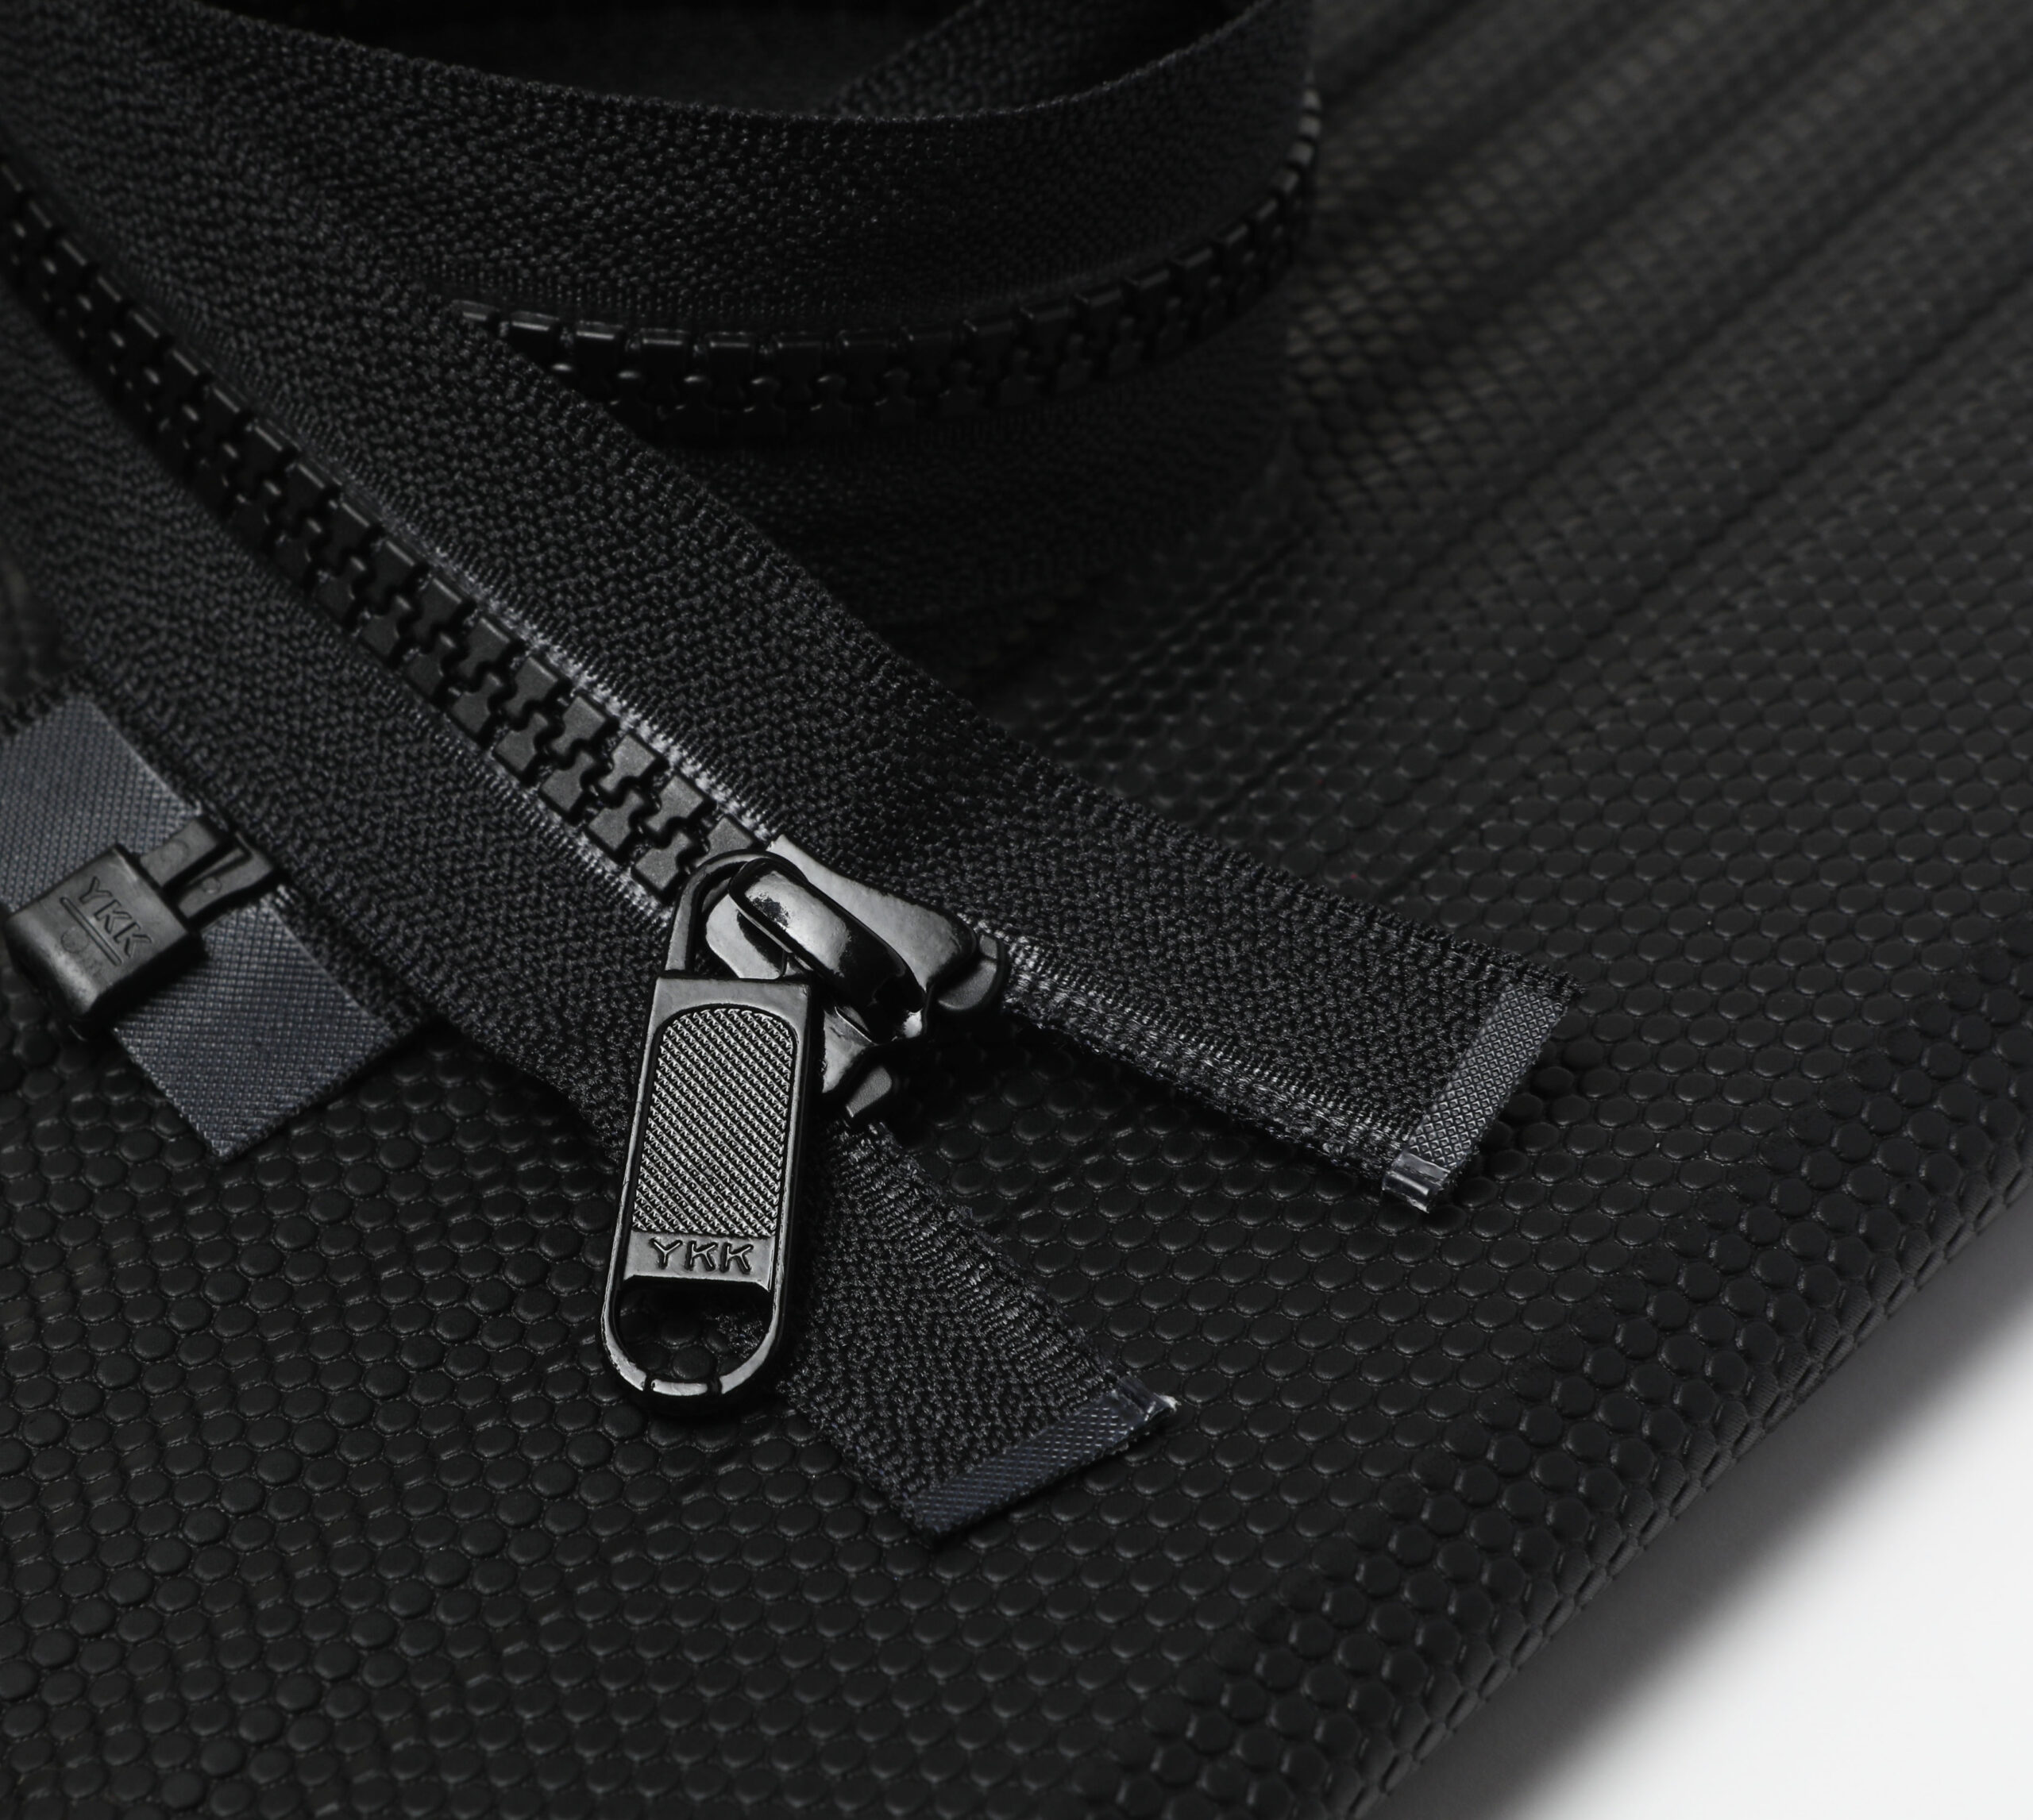 YKK Zipper Original Japanese Plastic Vislon Zipper Black-grey 